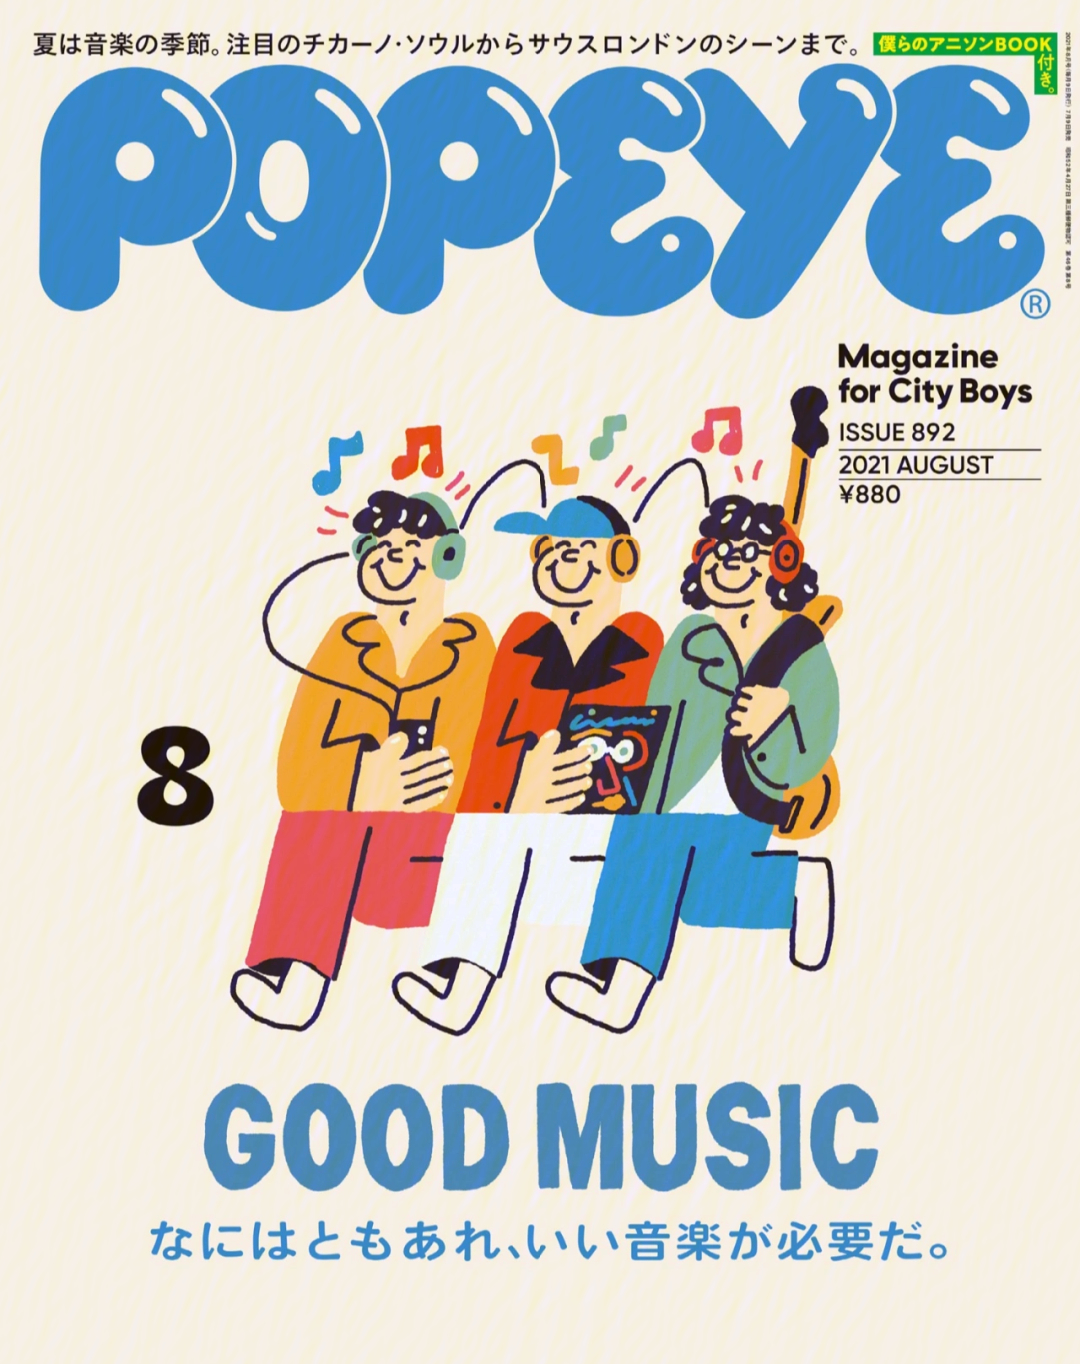 popeye神奇杂志